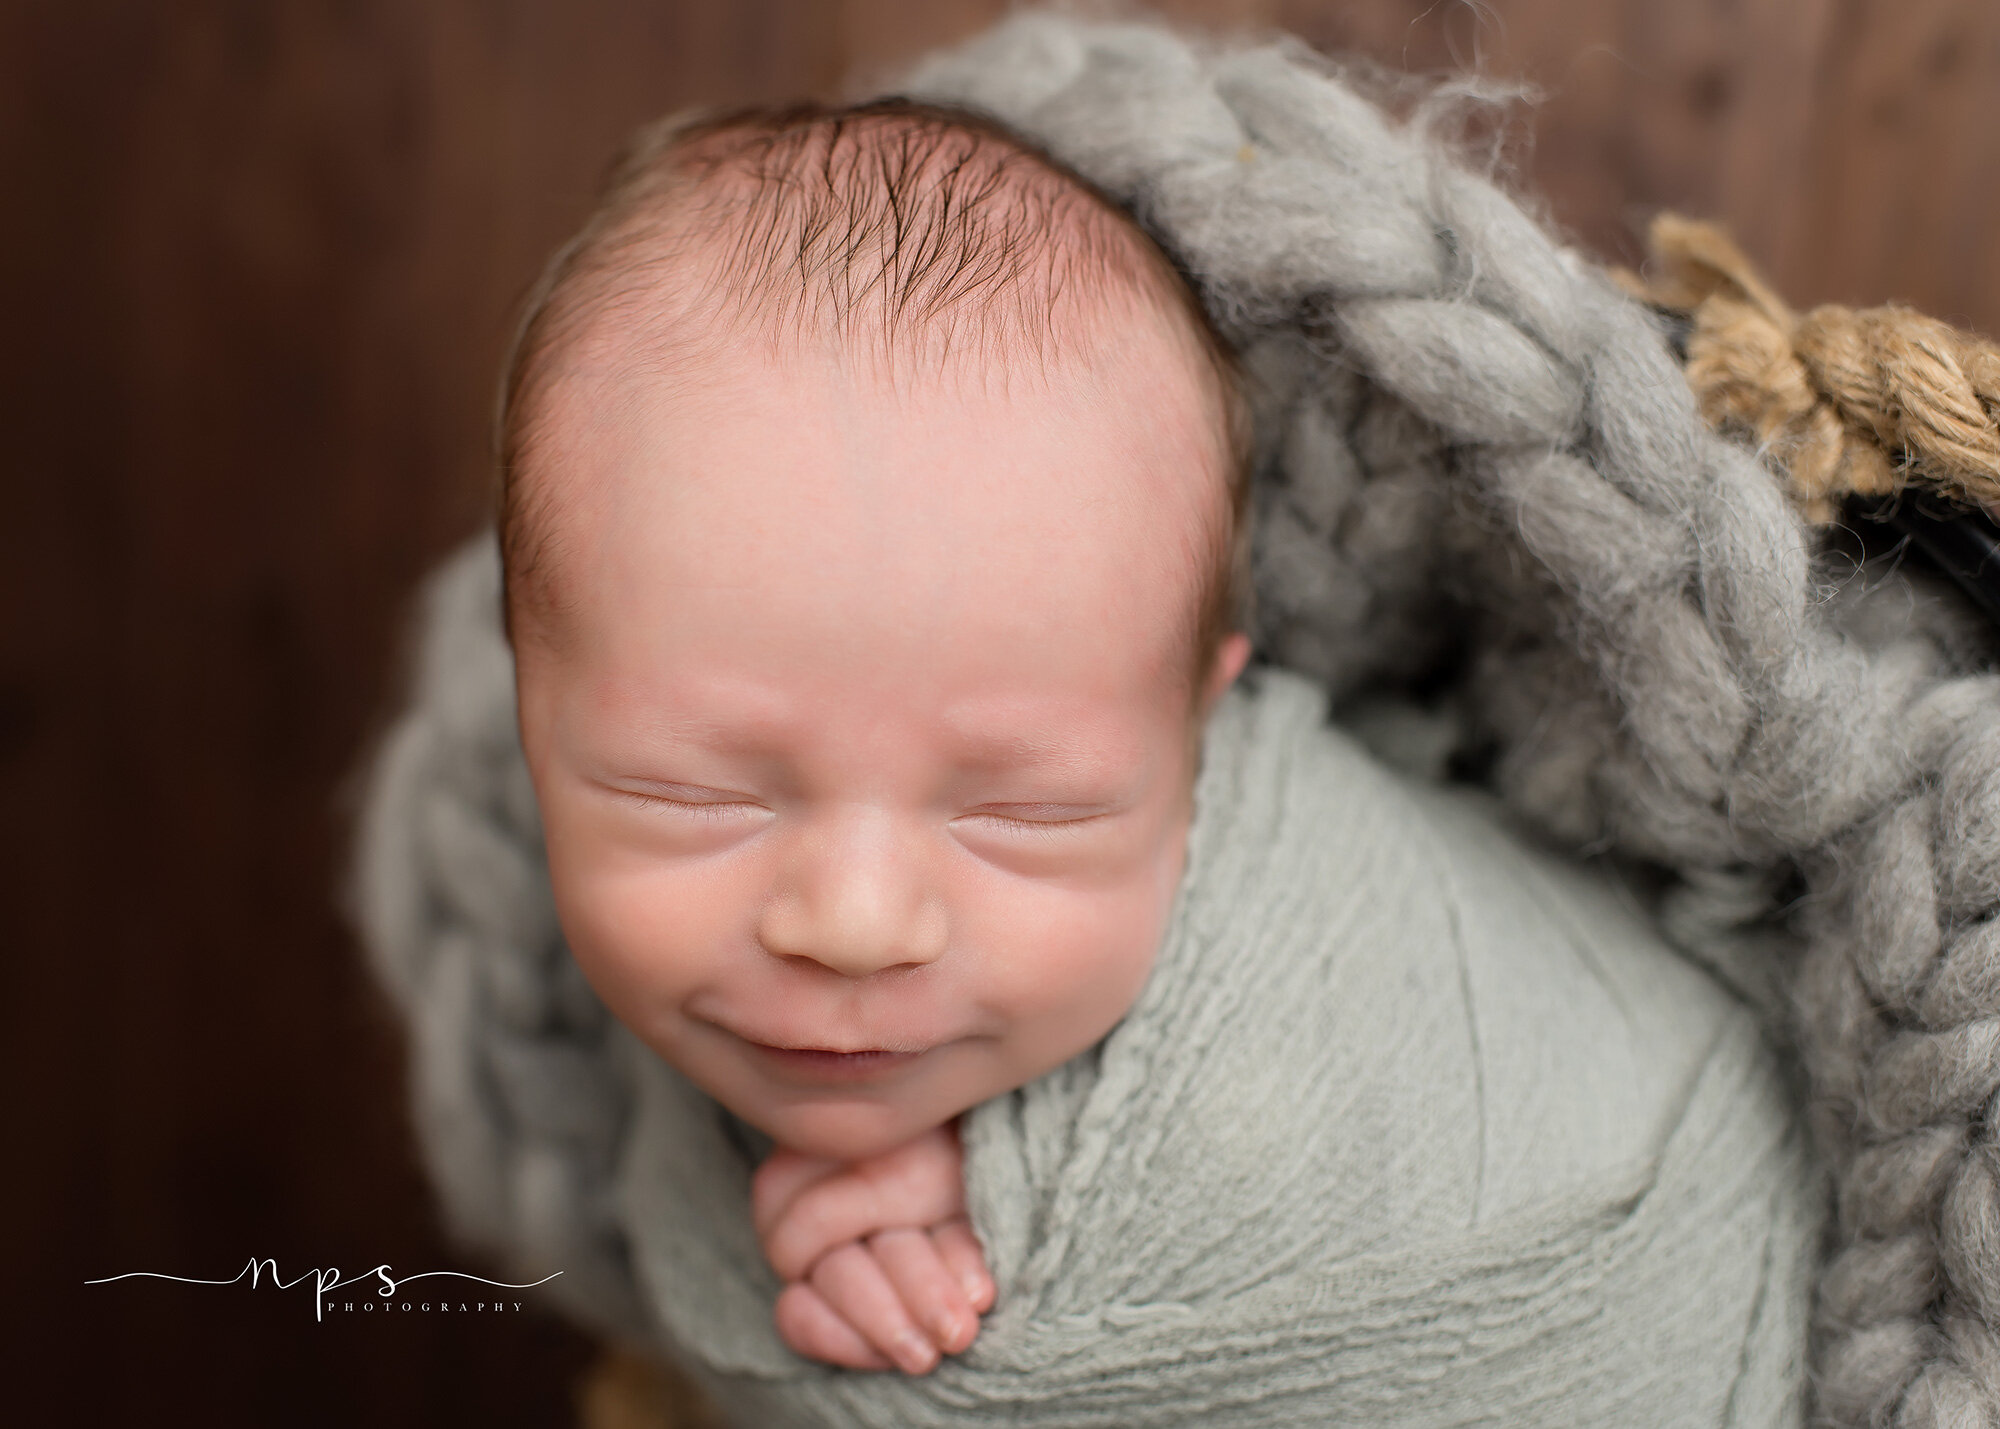 Newborn Baby Boy 004 - NPS Photography